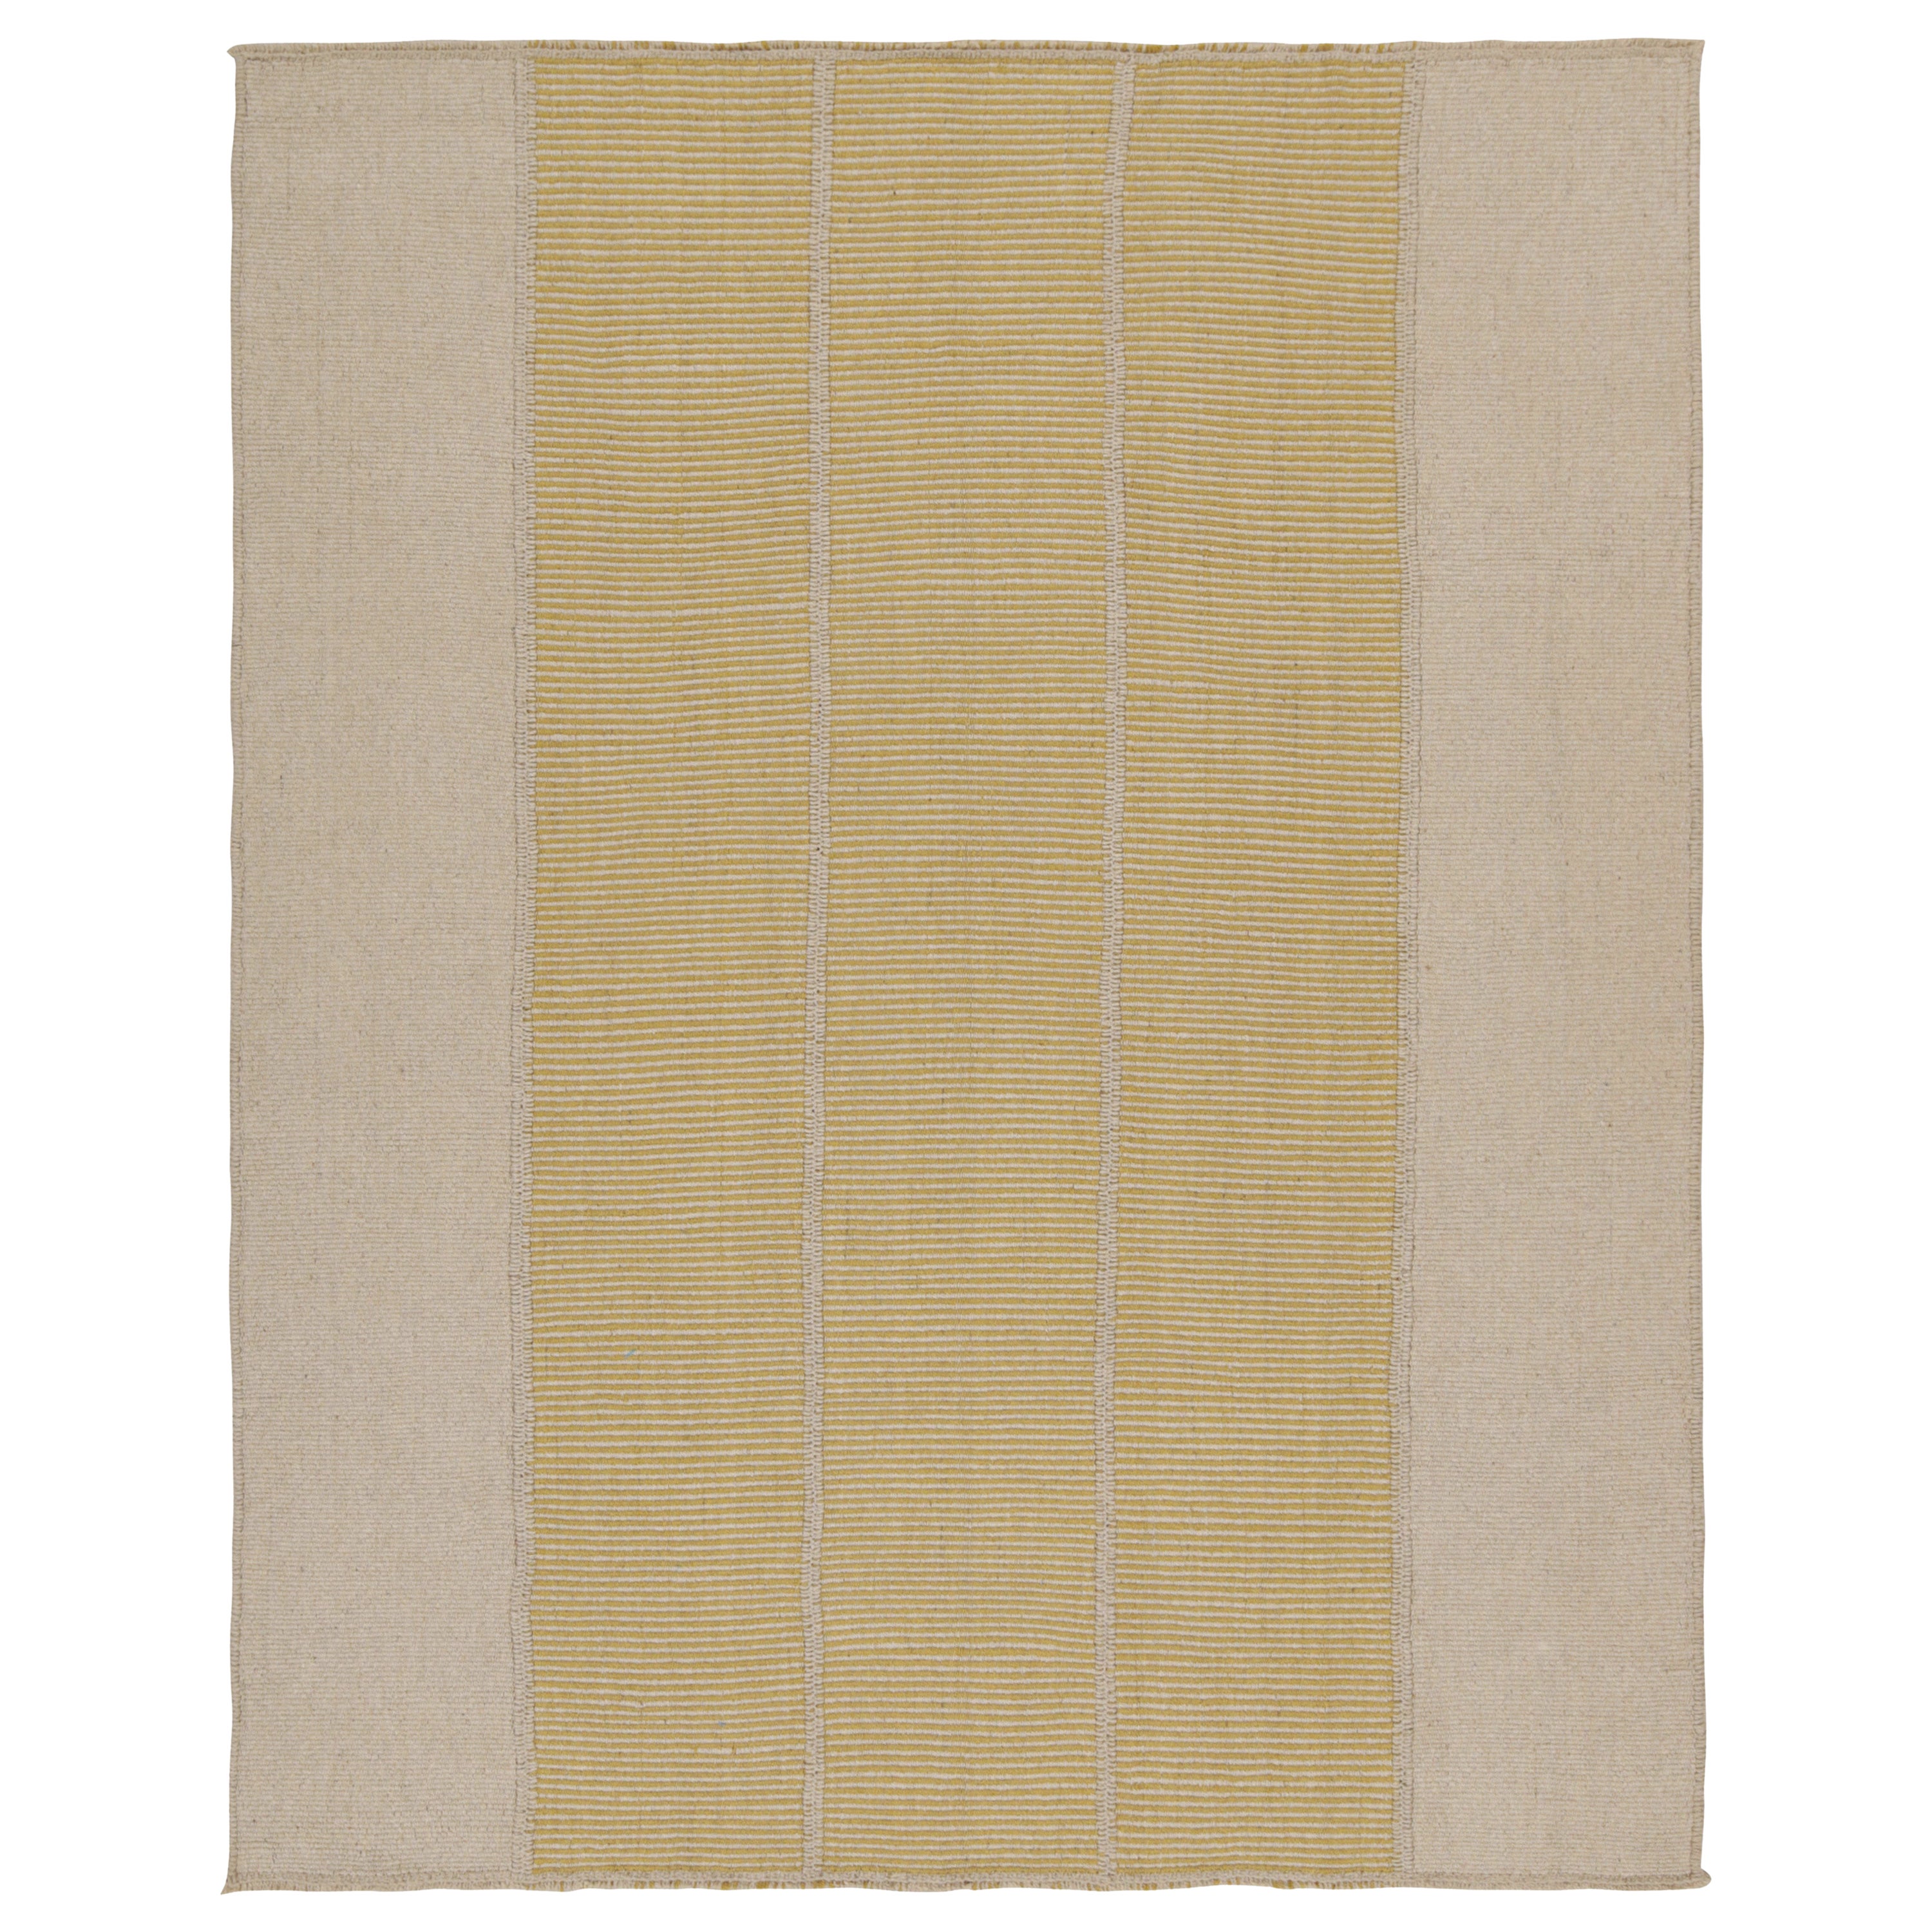 Rug & Kilim's Contemporary Kilim in Beige and Gold Stripes (Kilim contemporain à rayures beige et or)  en vente